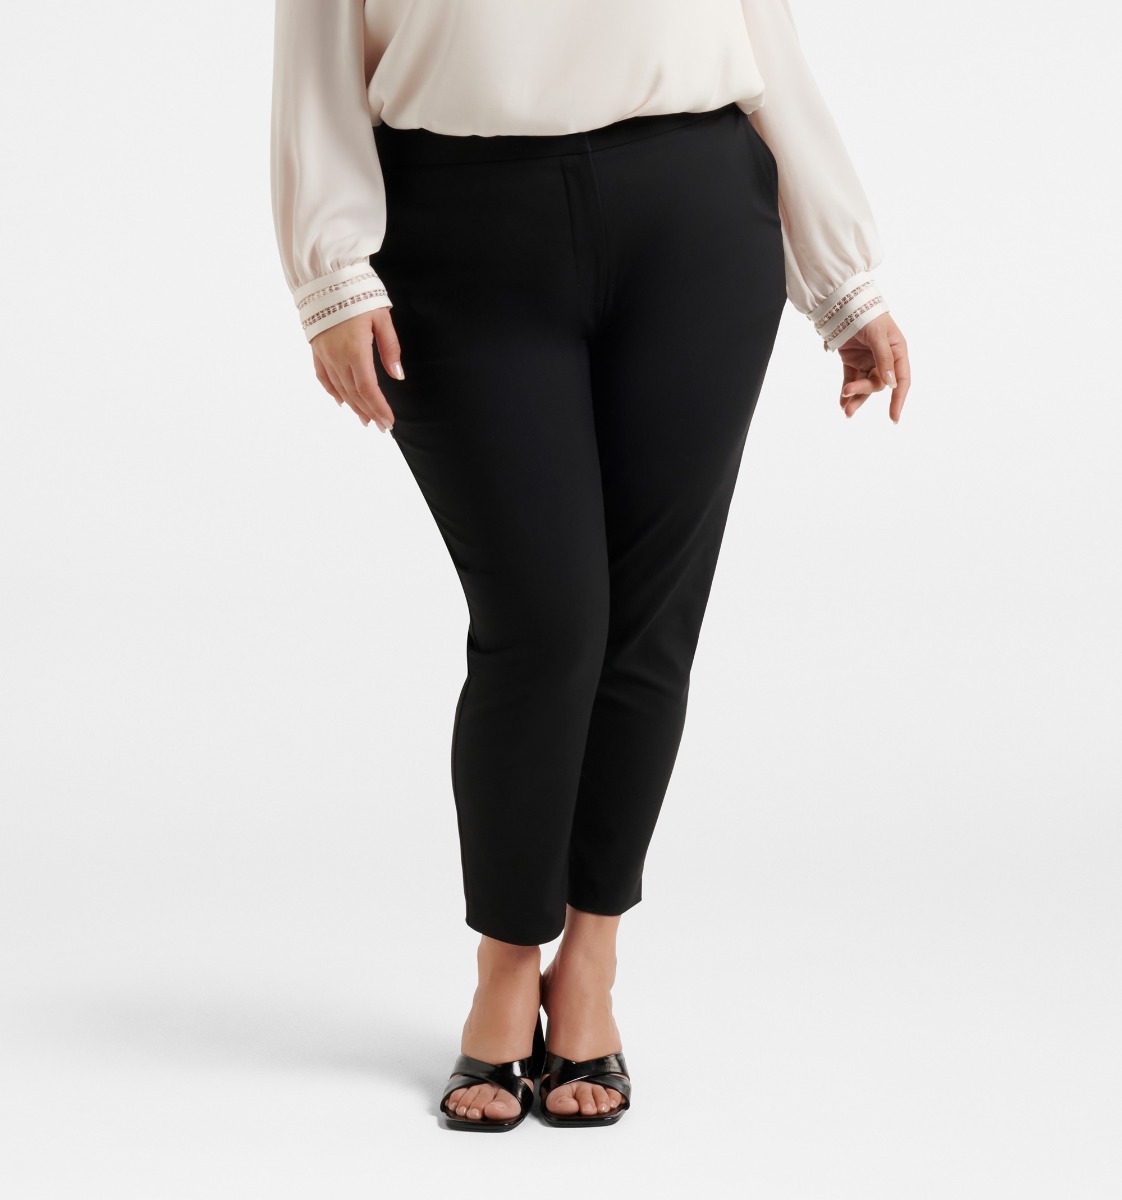 Buy Plus Size White Tummy Tucker Crop Pants Online For Women - Amydus